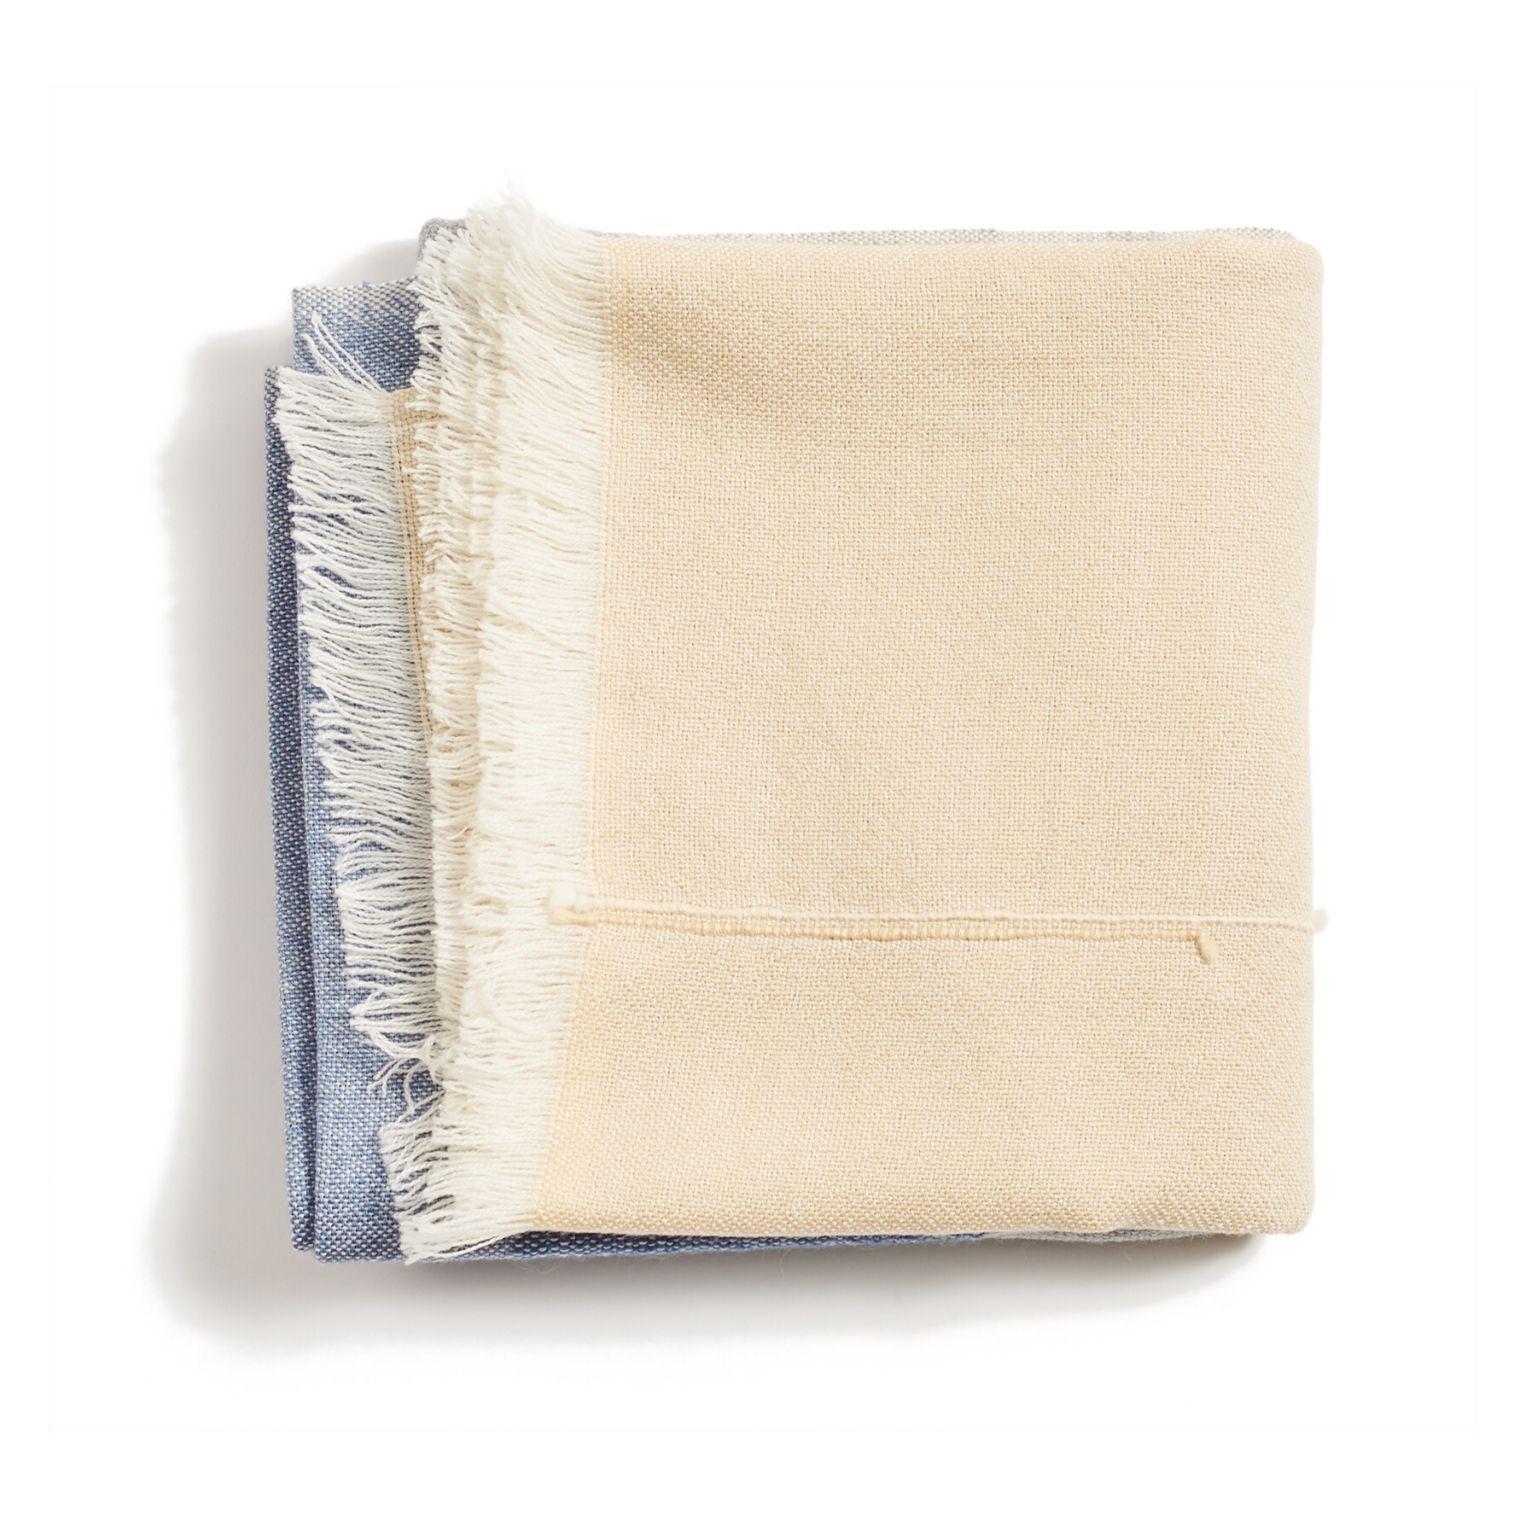 Ceru Handloom Merino Throw / Blanket in Neutral Shades of Cream & Serene Blue For Sale 2